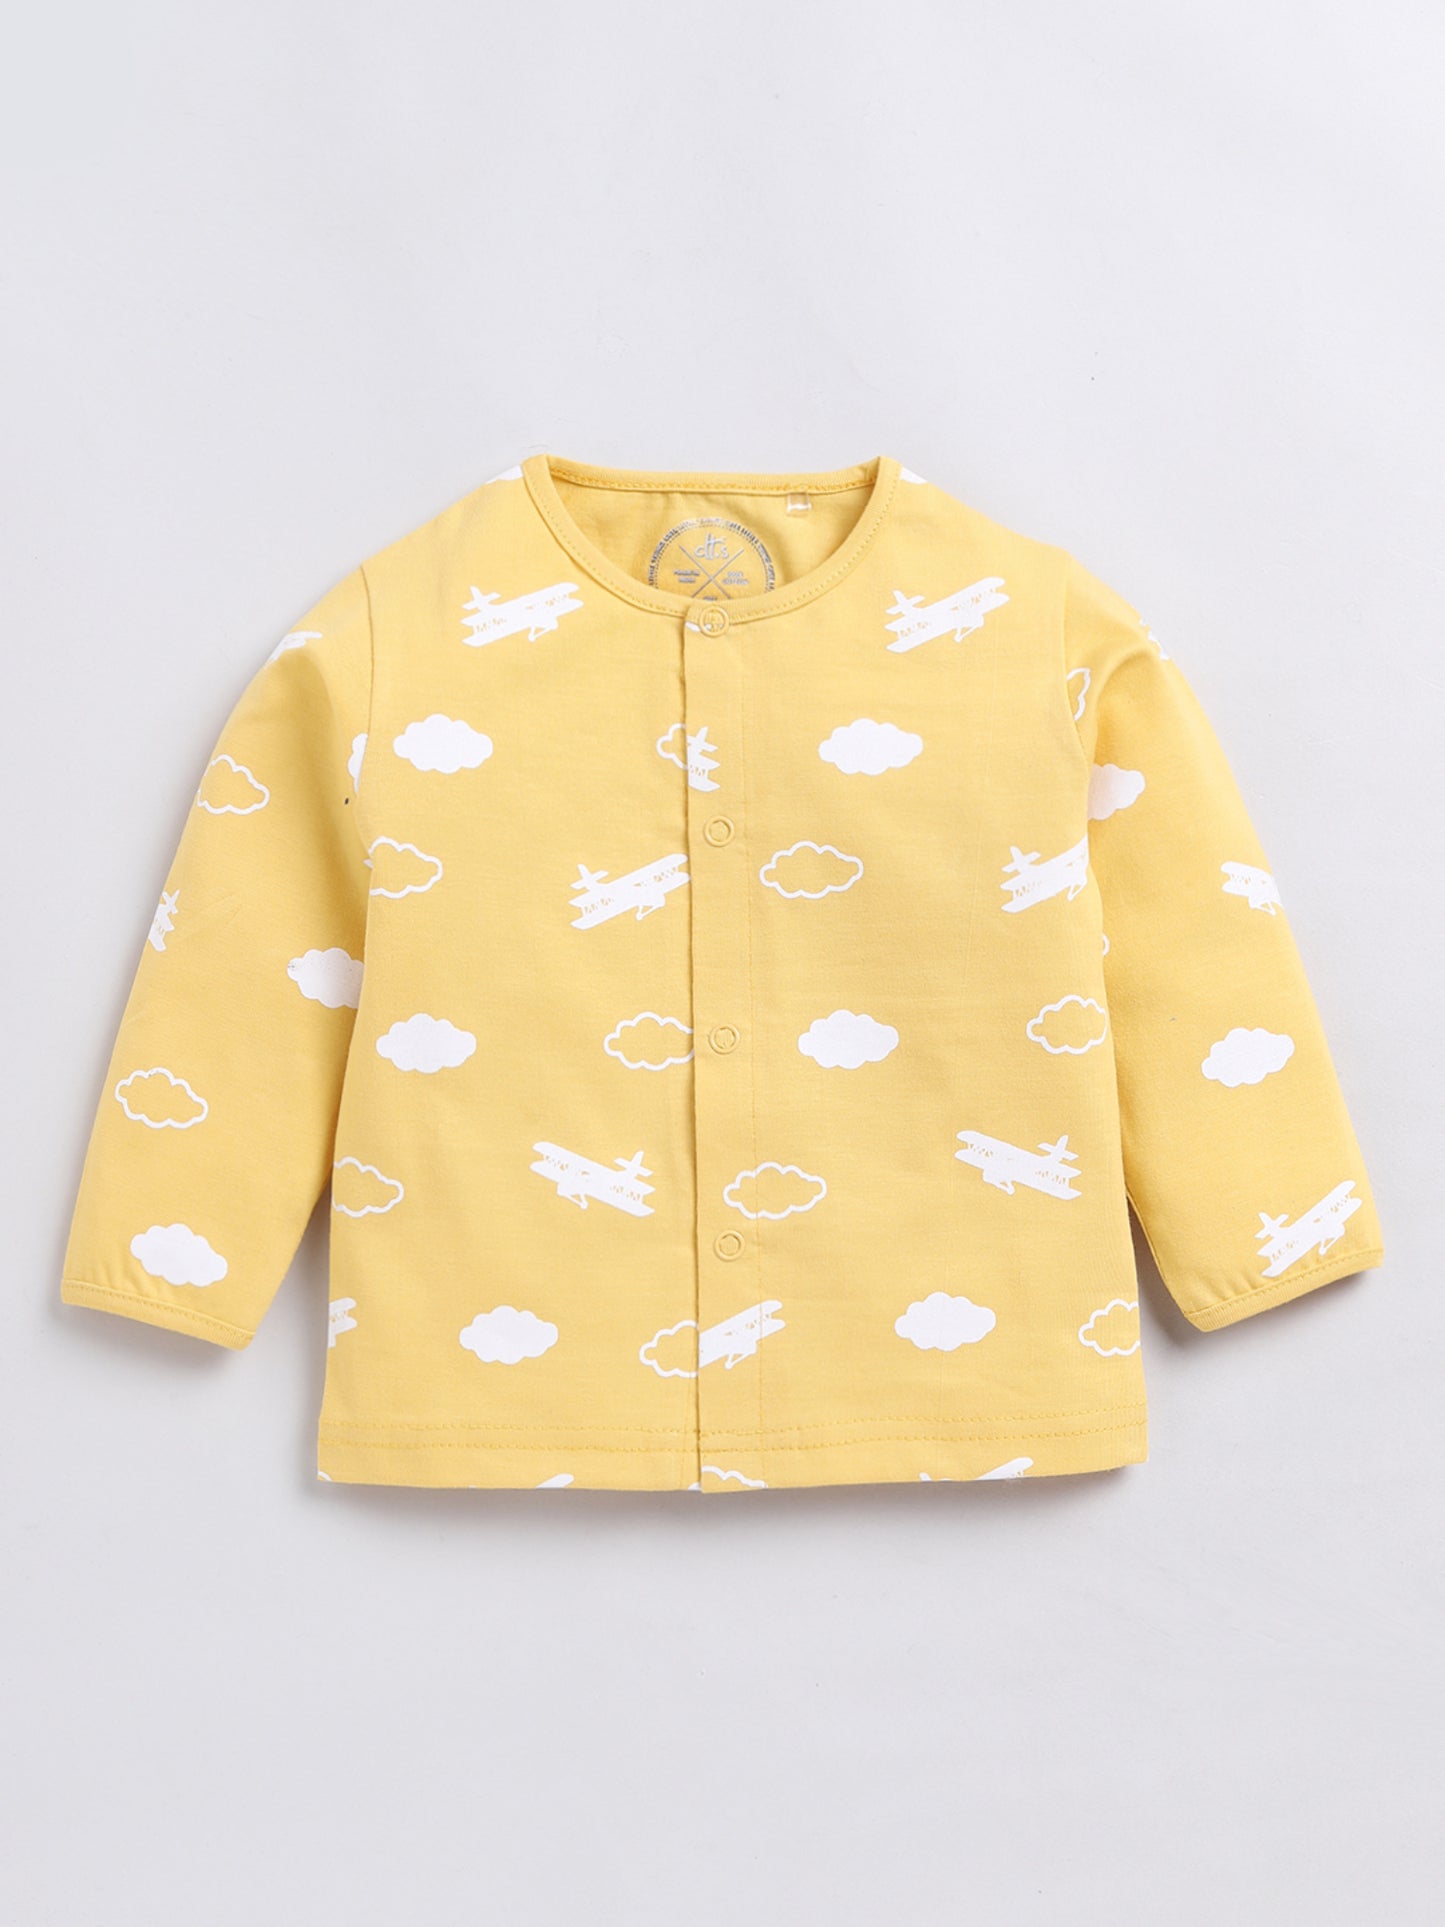 Aeroplane & Clouds Yellow Full Sleeve Nightwear Set